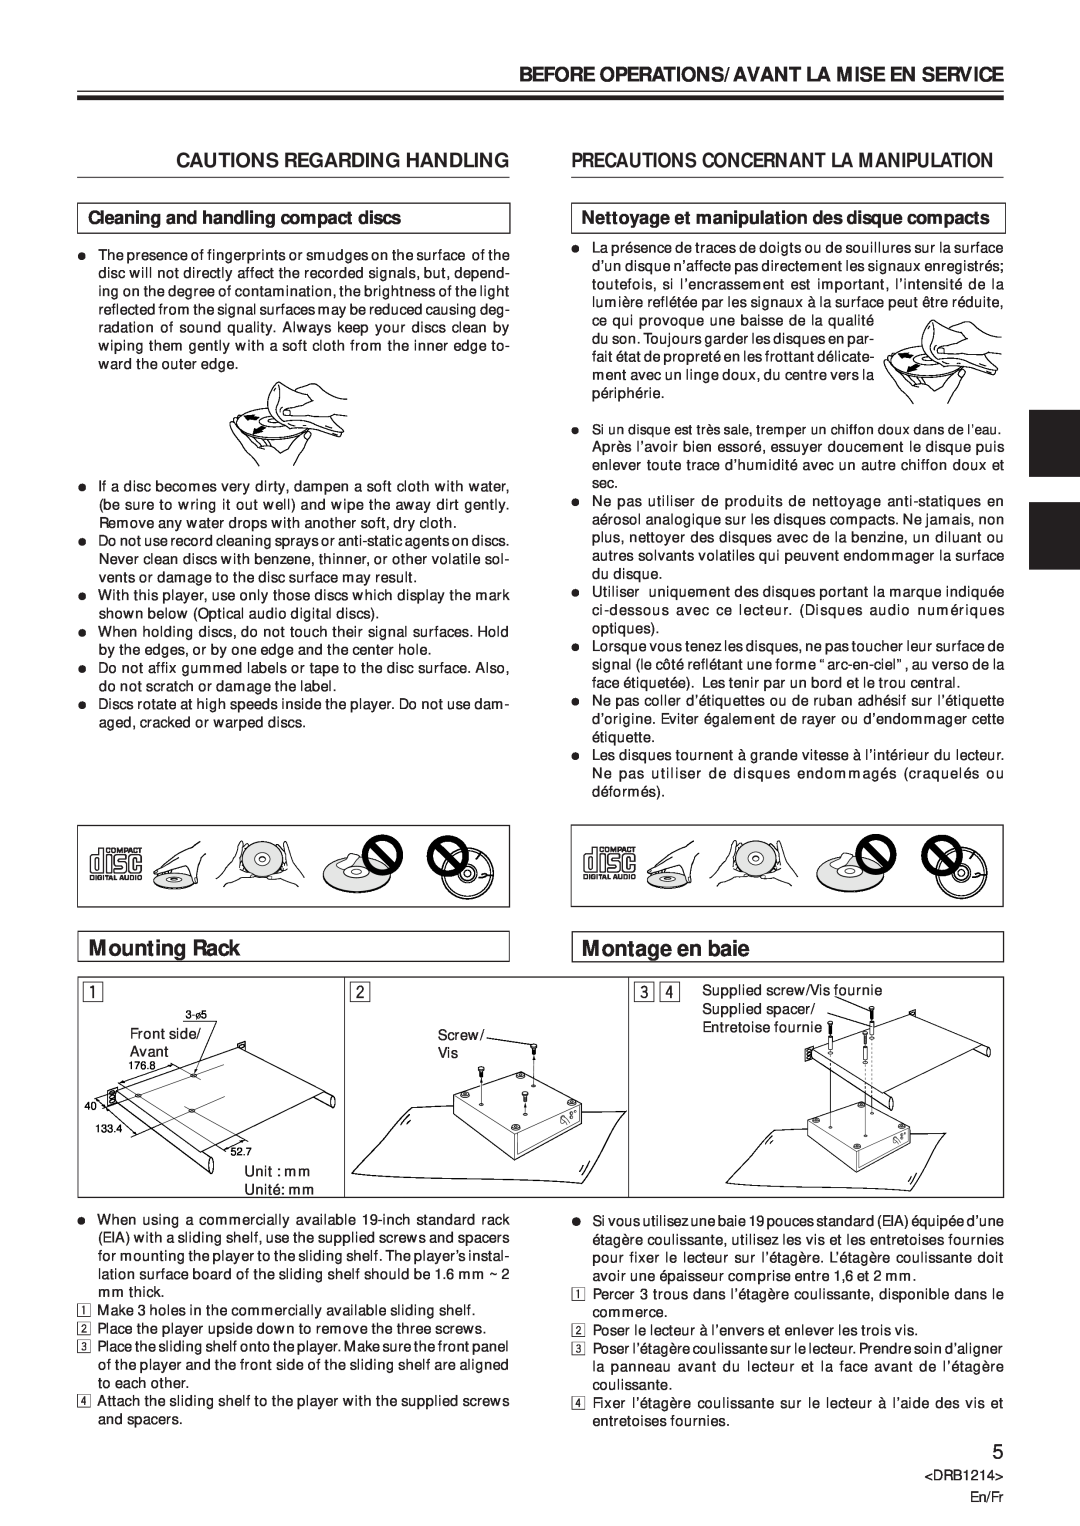 Pioneer CDJ-500S Mounting Rack, Montage en baie, Precautions Concernant La Manipulation, Cautions Regarding Handling 